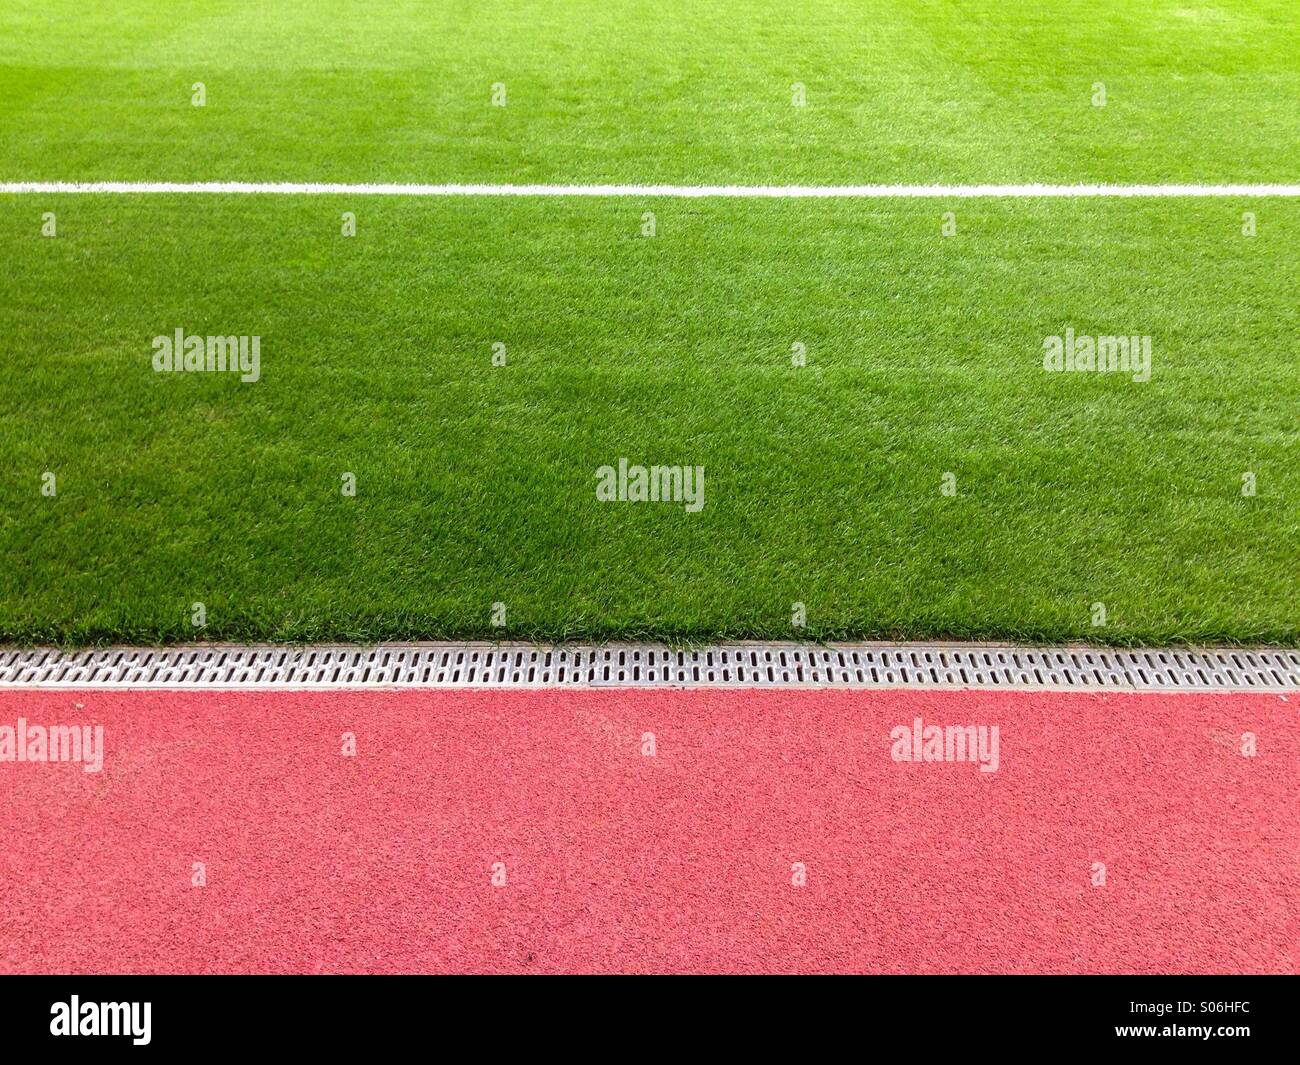 Sideline on a football field Stock Photo